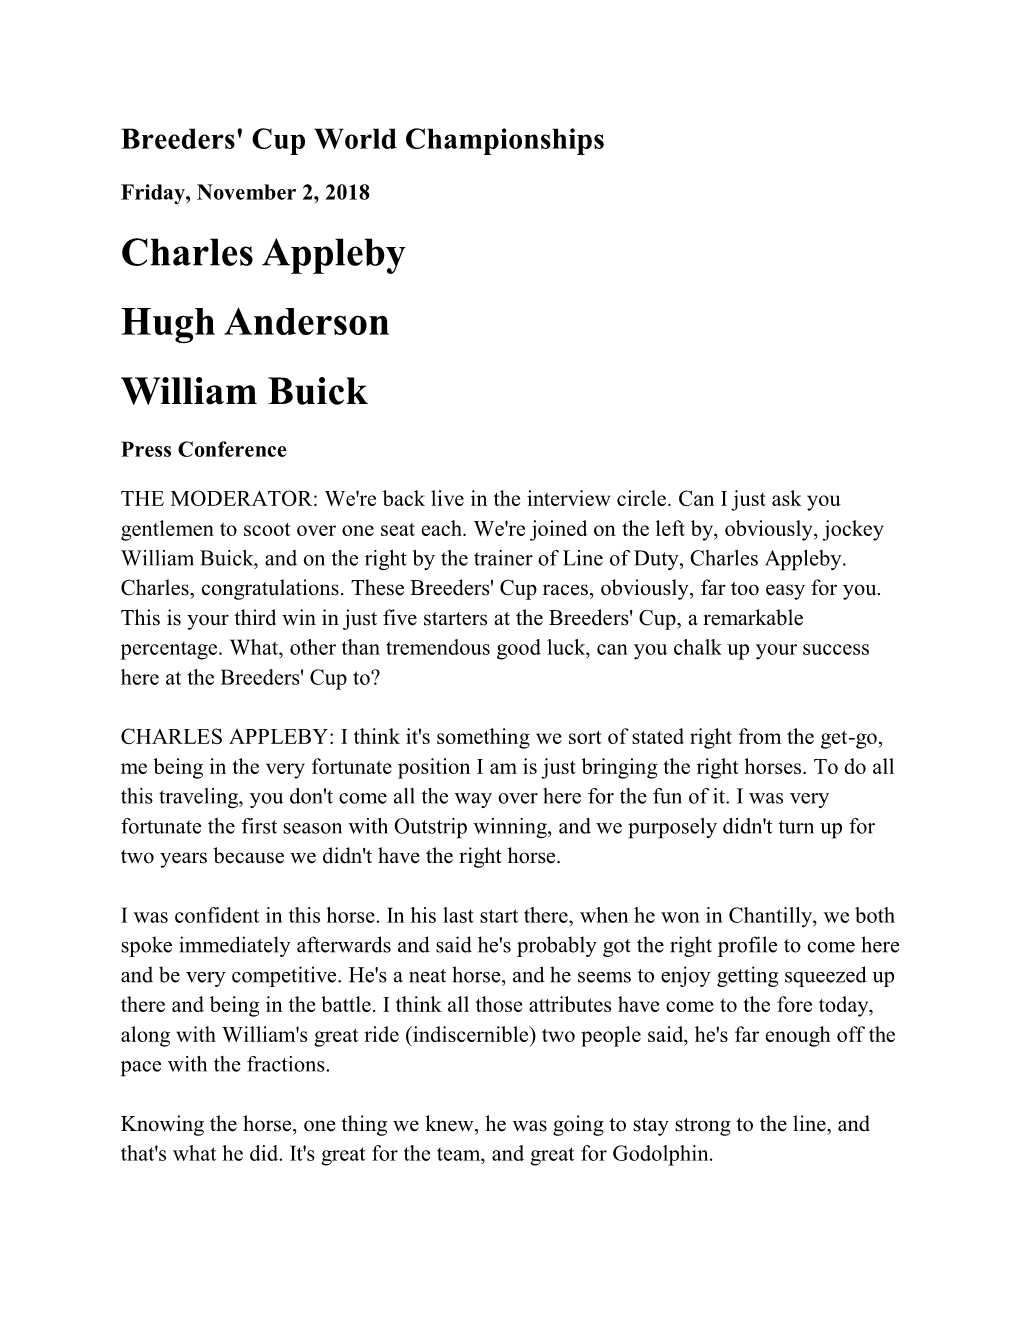 Charles Appleby Hugh Anderson William Buick